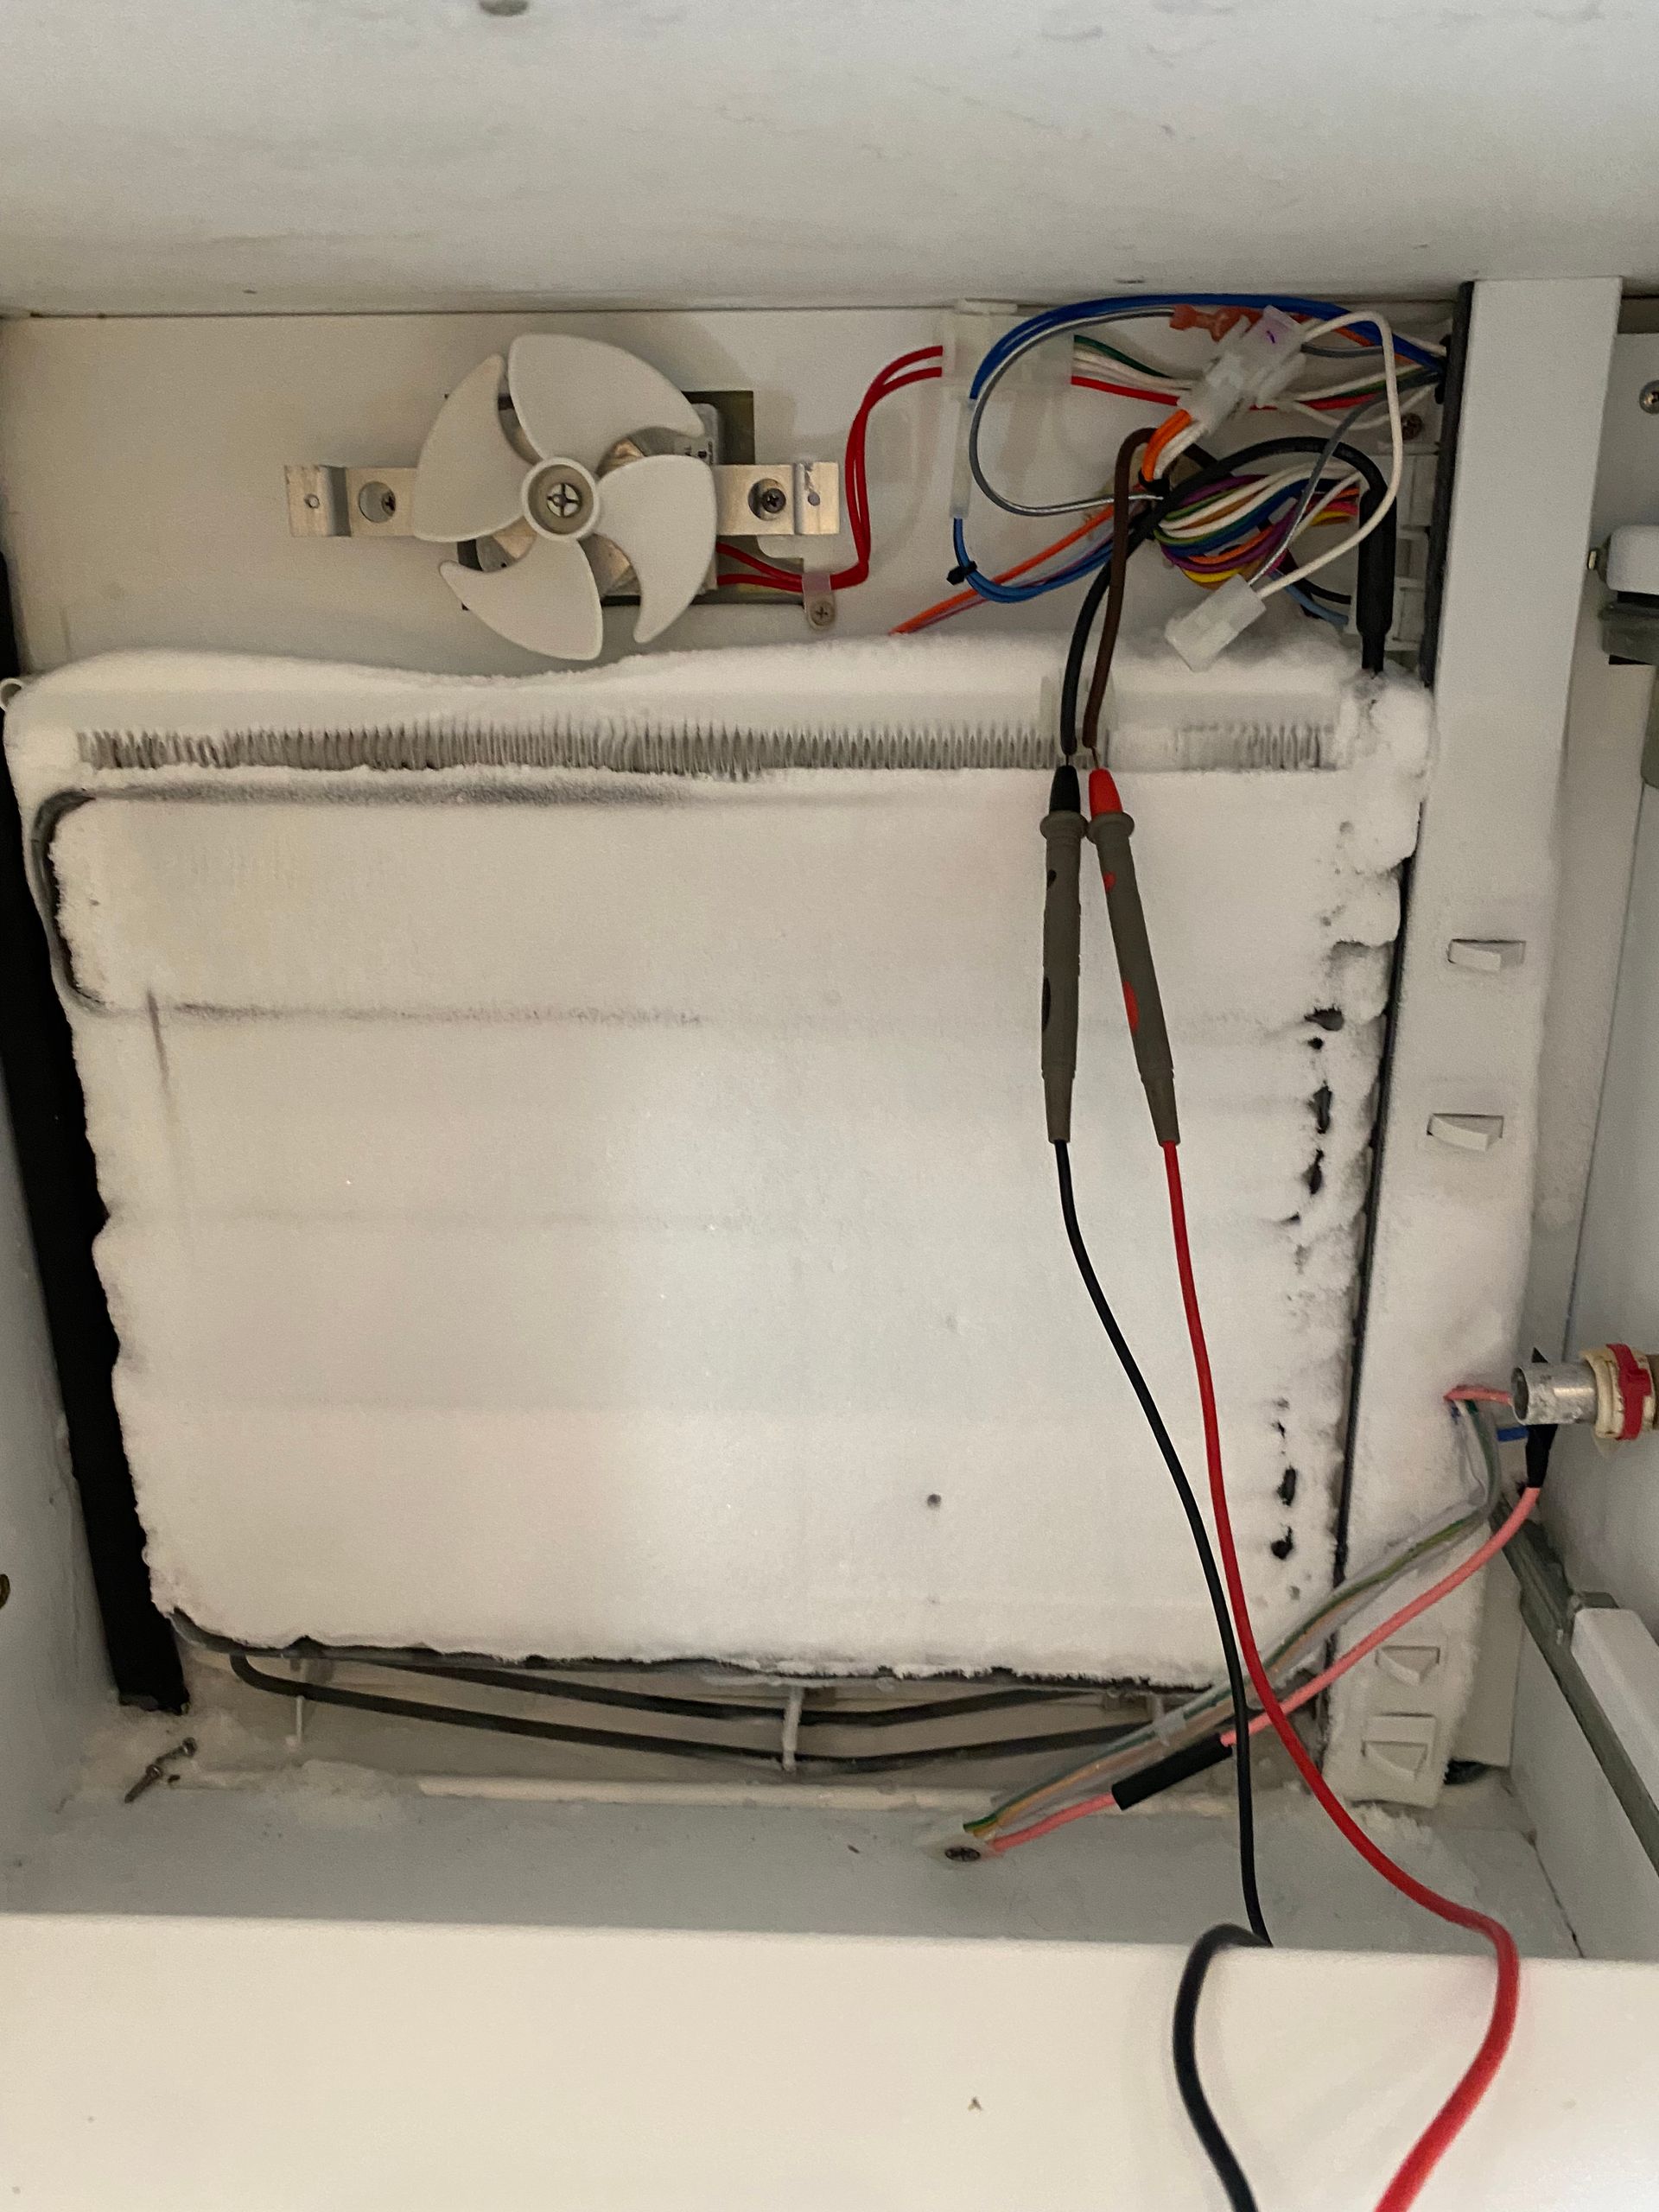 Refrigerator repair by Level Appliance Repair